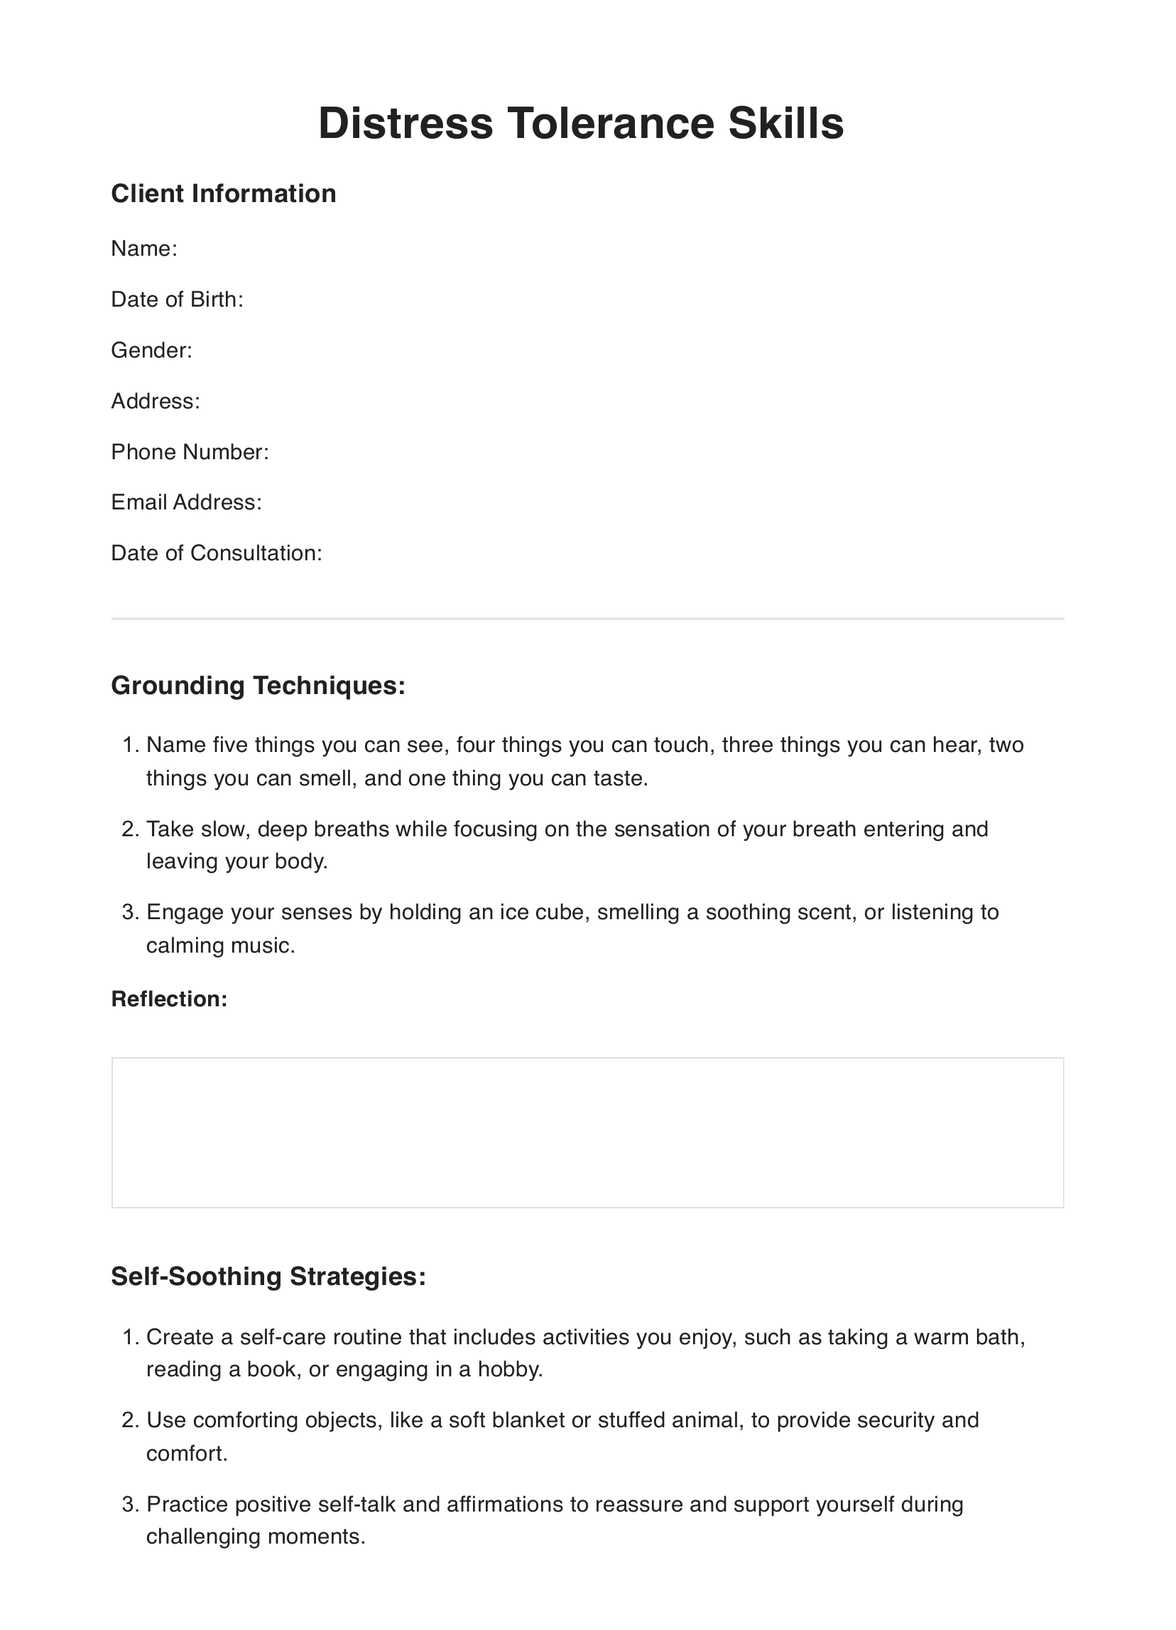 Distress Tolerance Skills PDF PDF Example